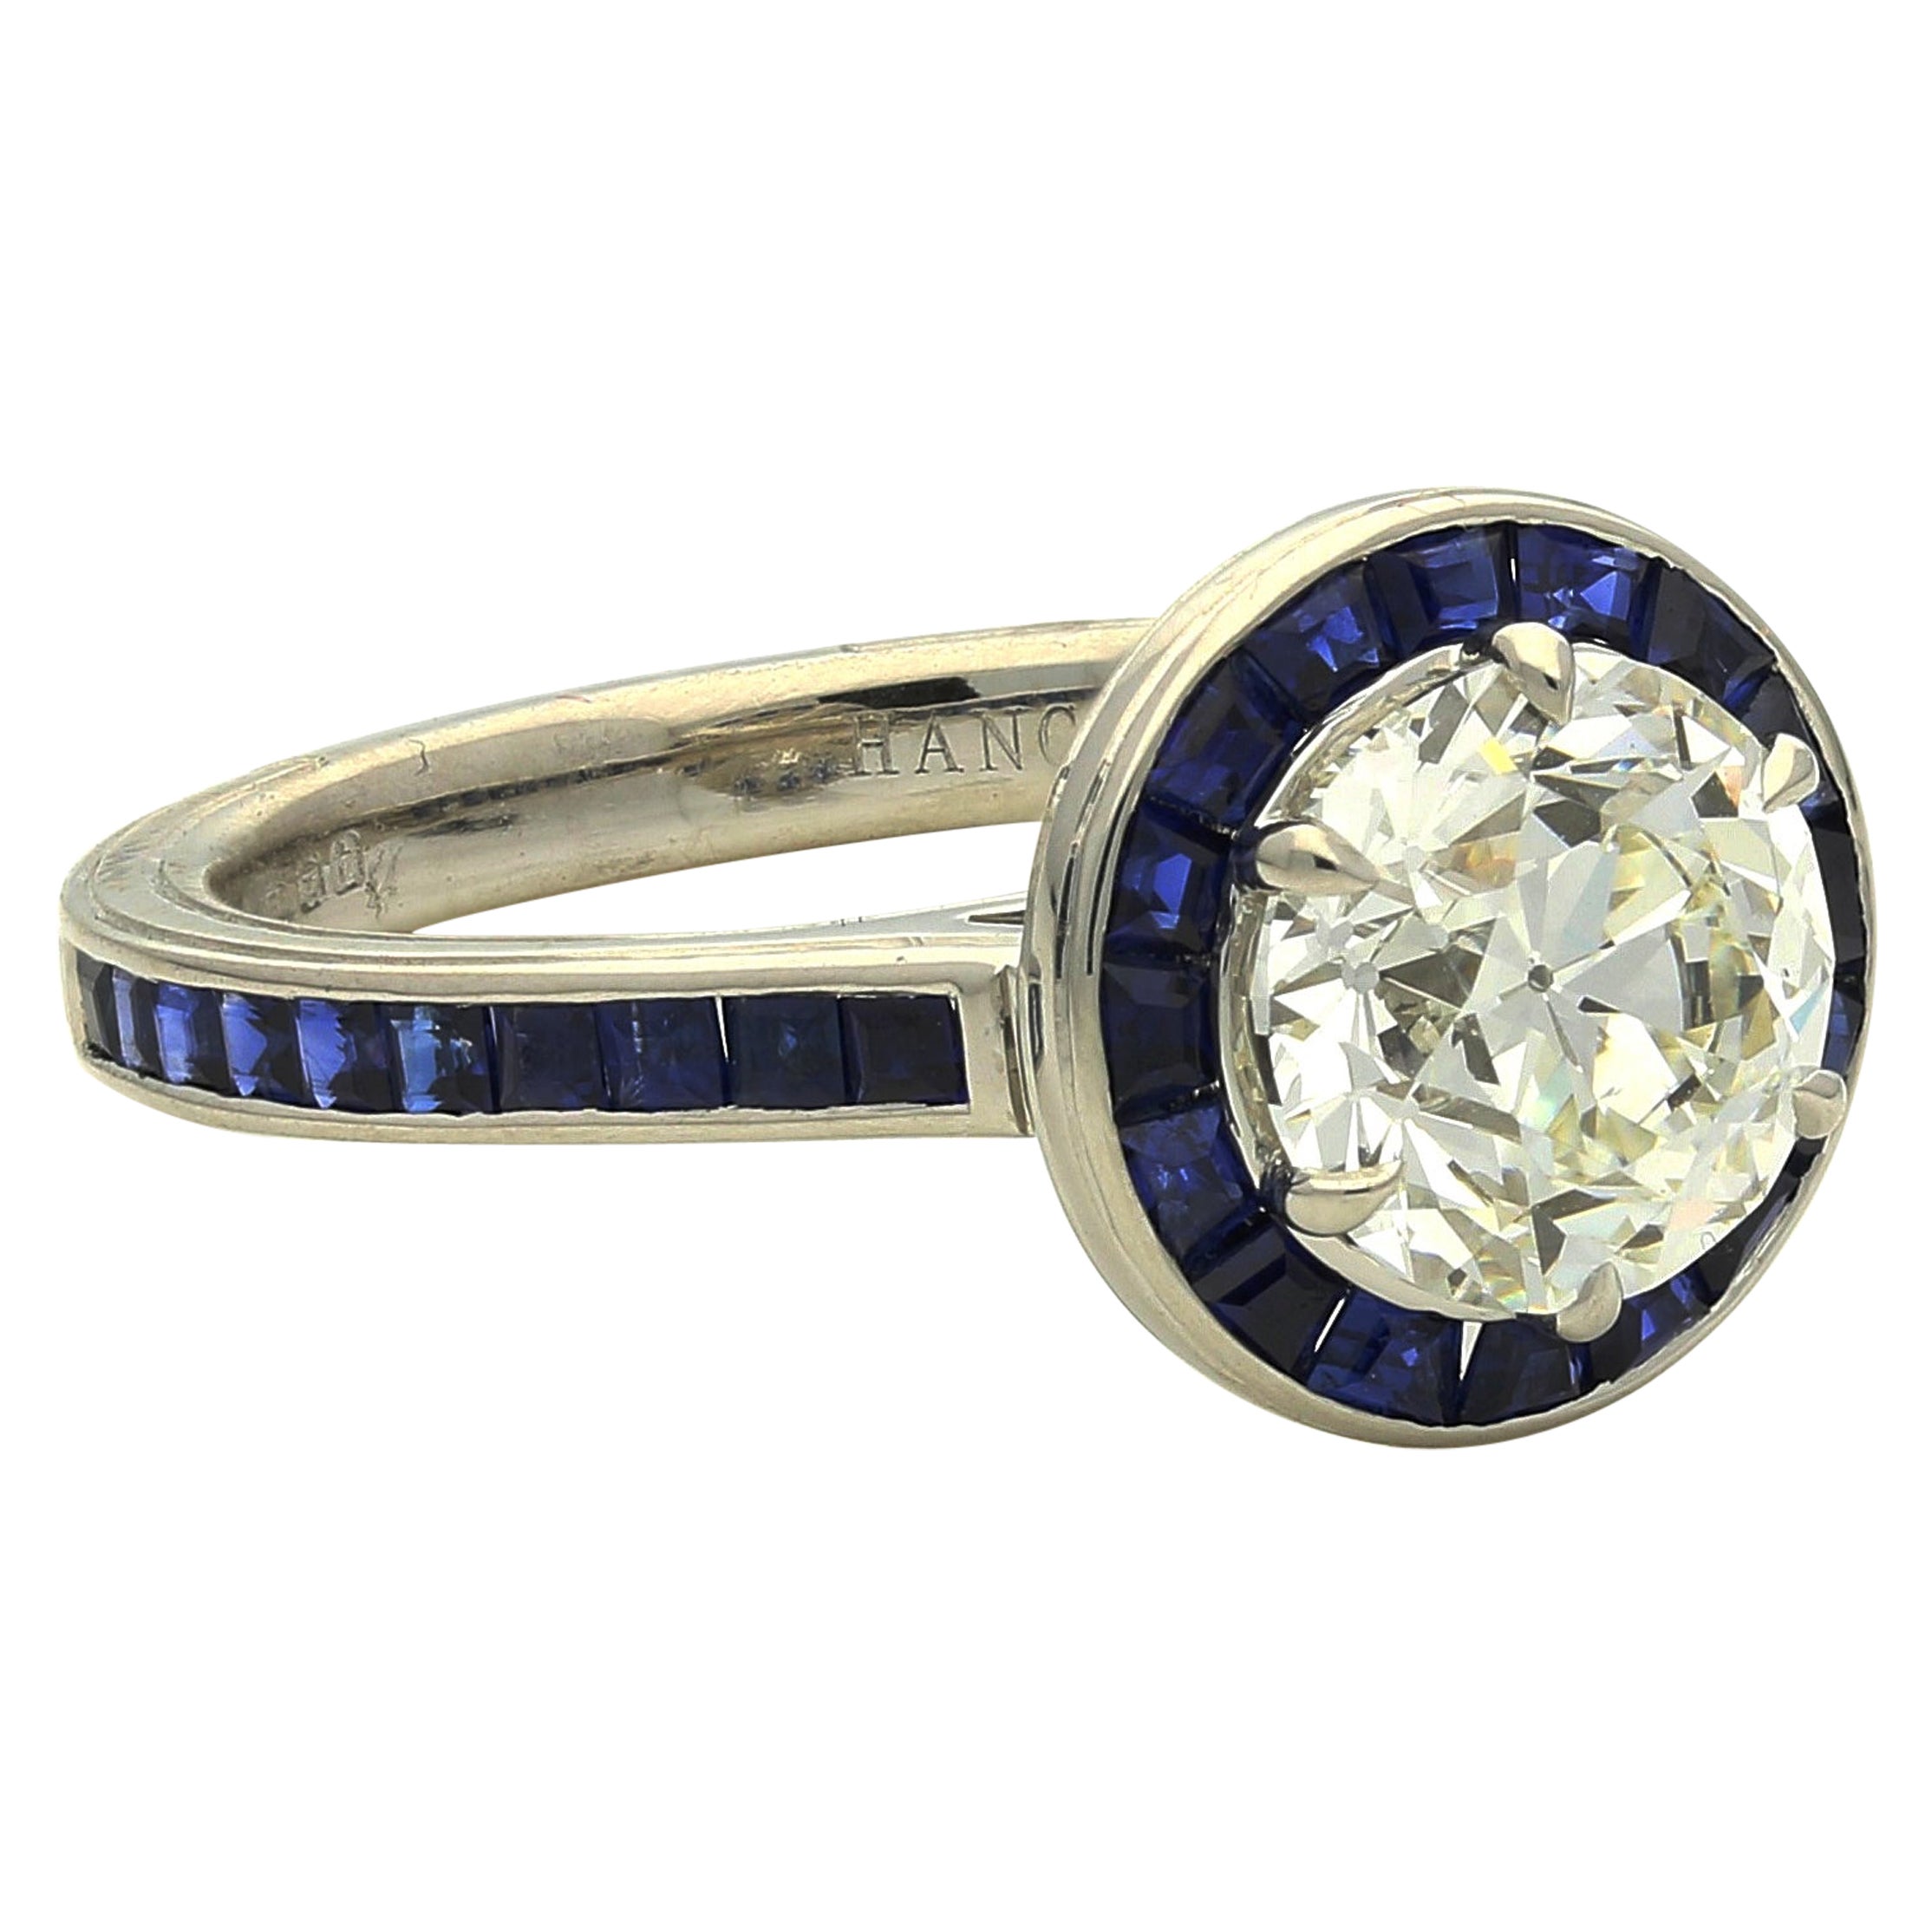 Hancocks Contemporary 2.02ct Old Cut Diamond Calibre Cut Sapphire Halo Ring For Sale